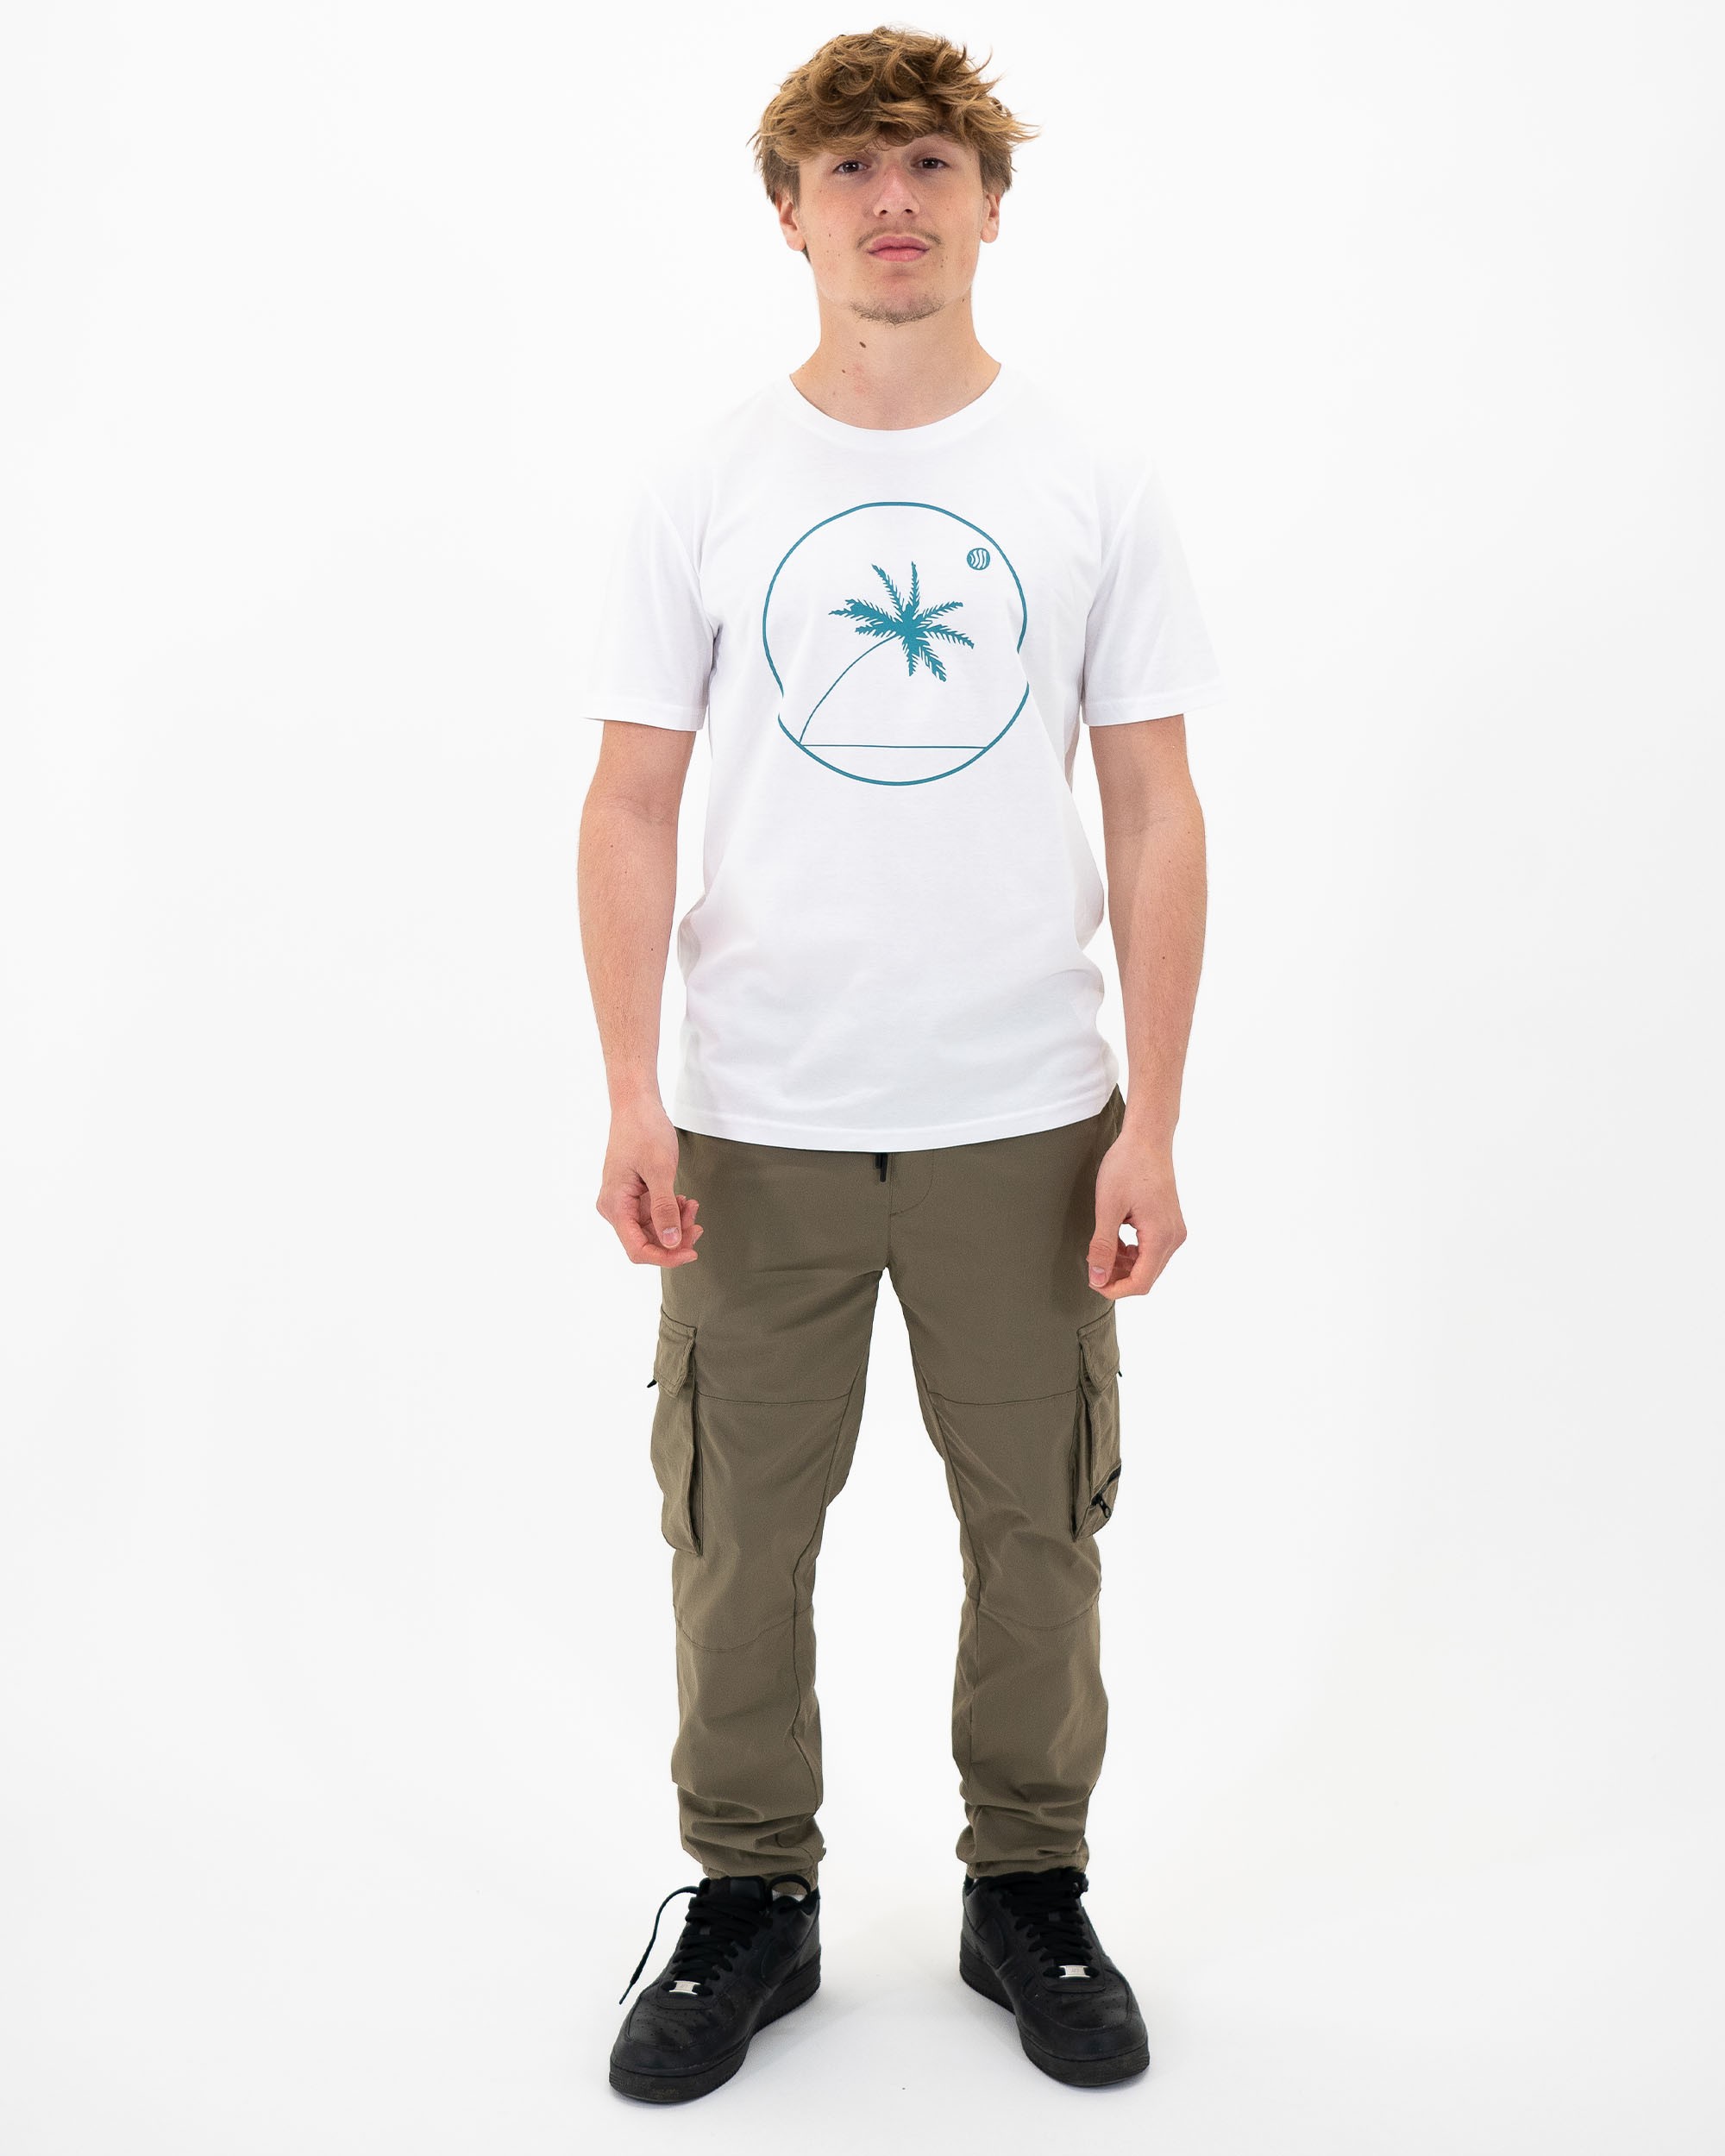 T-shirt Palmtree de couleur Blanc par Thymoos